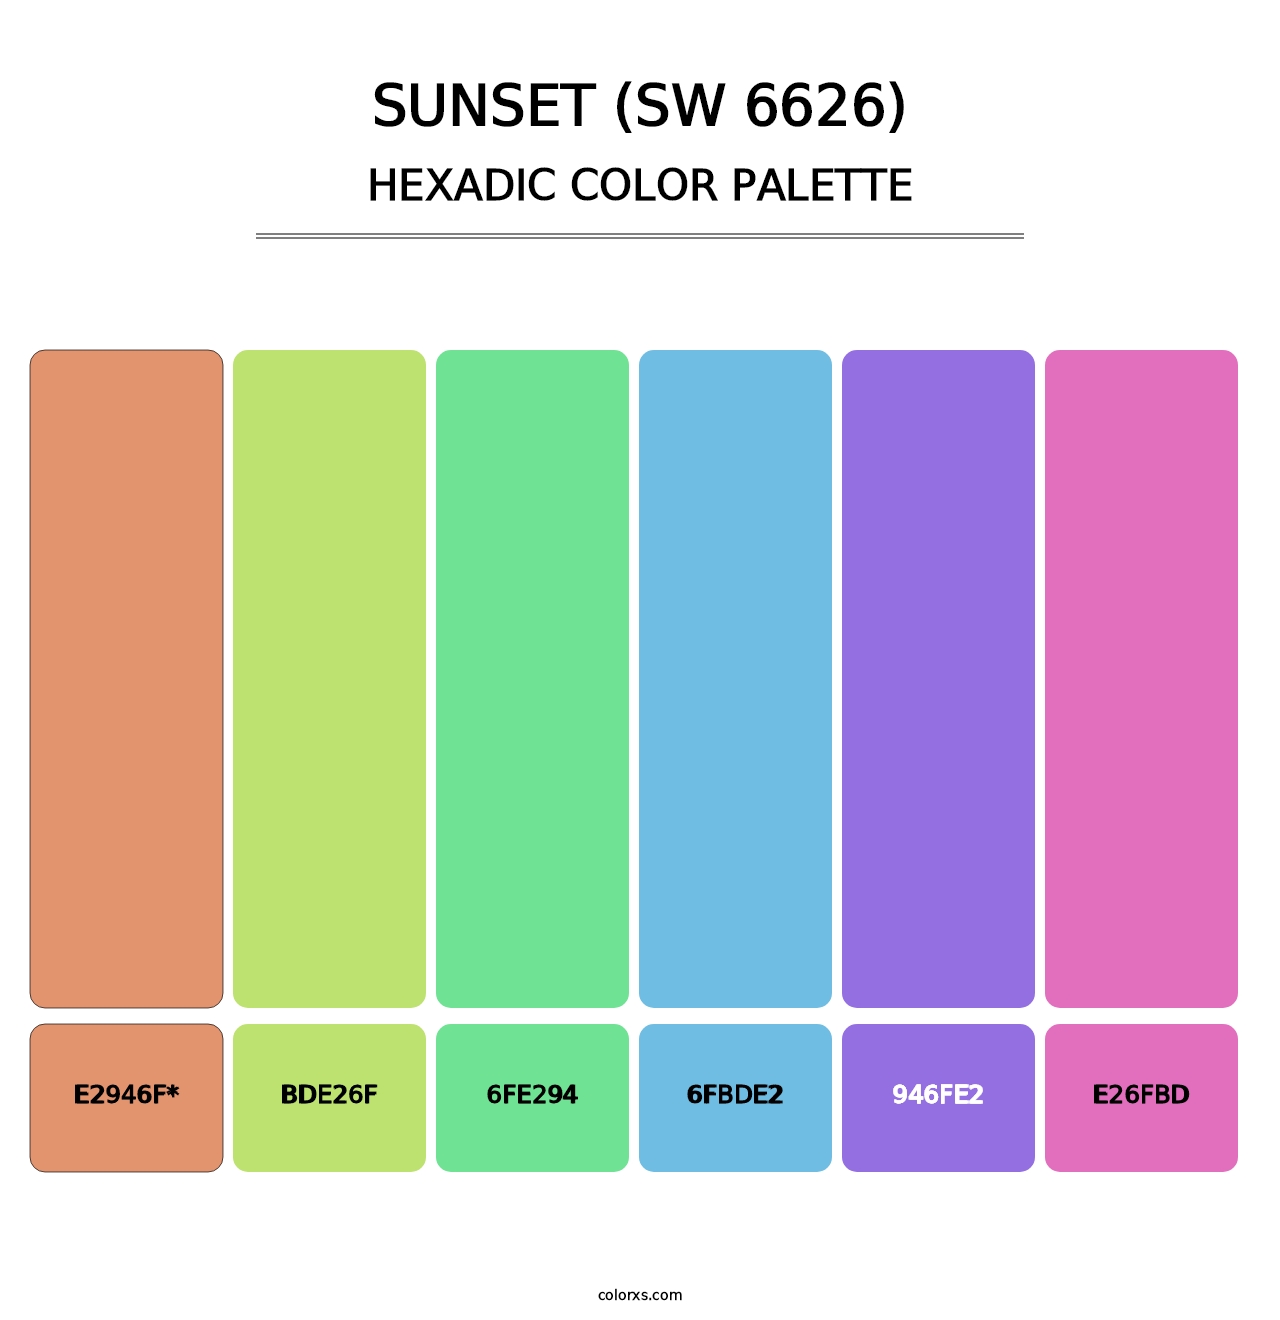 Sunset (SW 6626) - Hexadic Color Palette